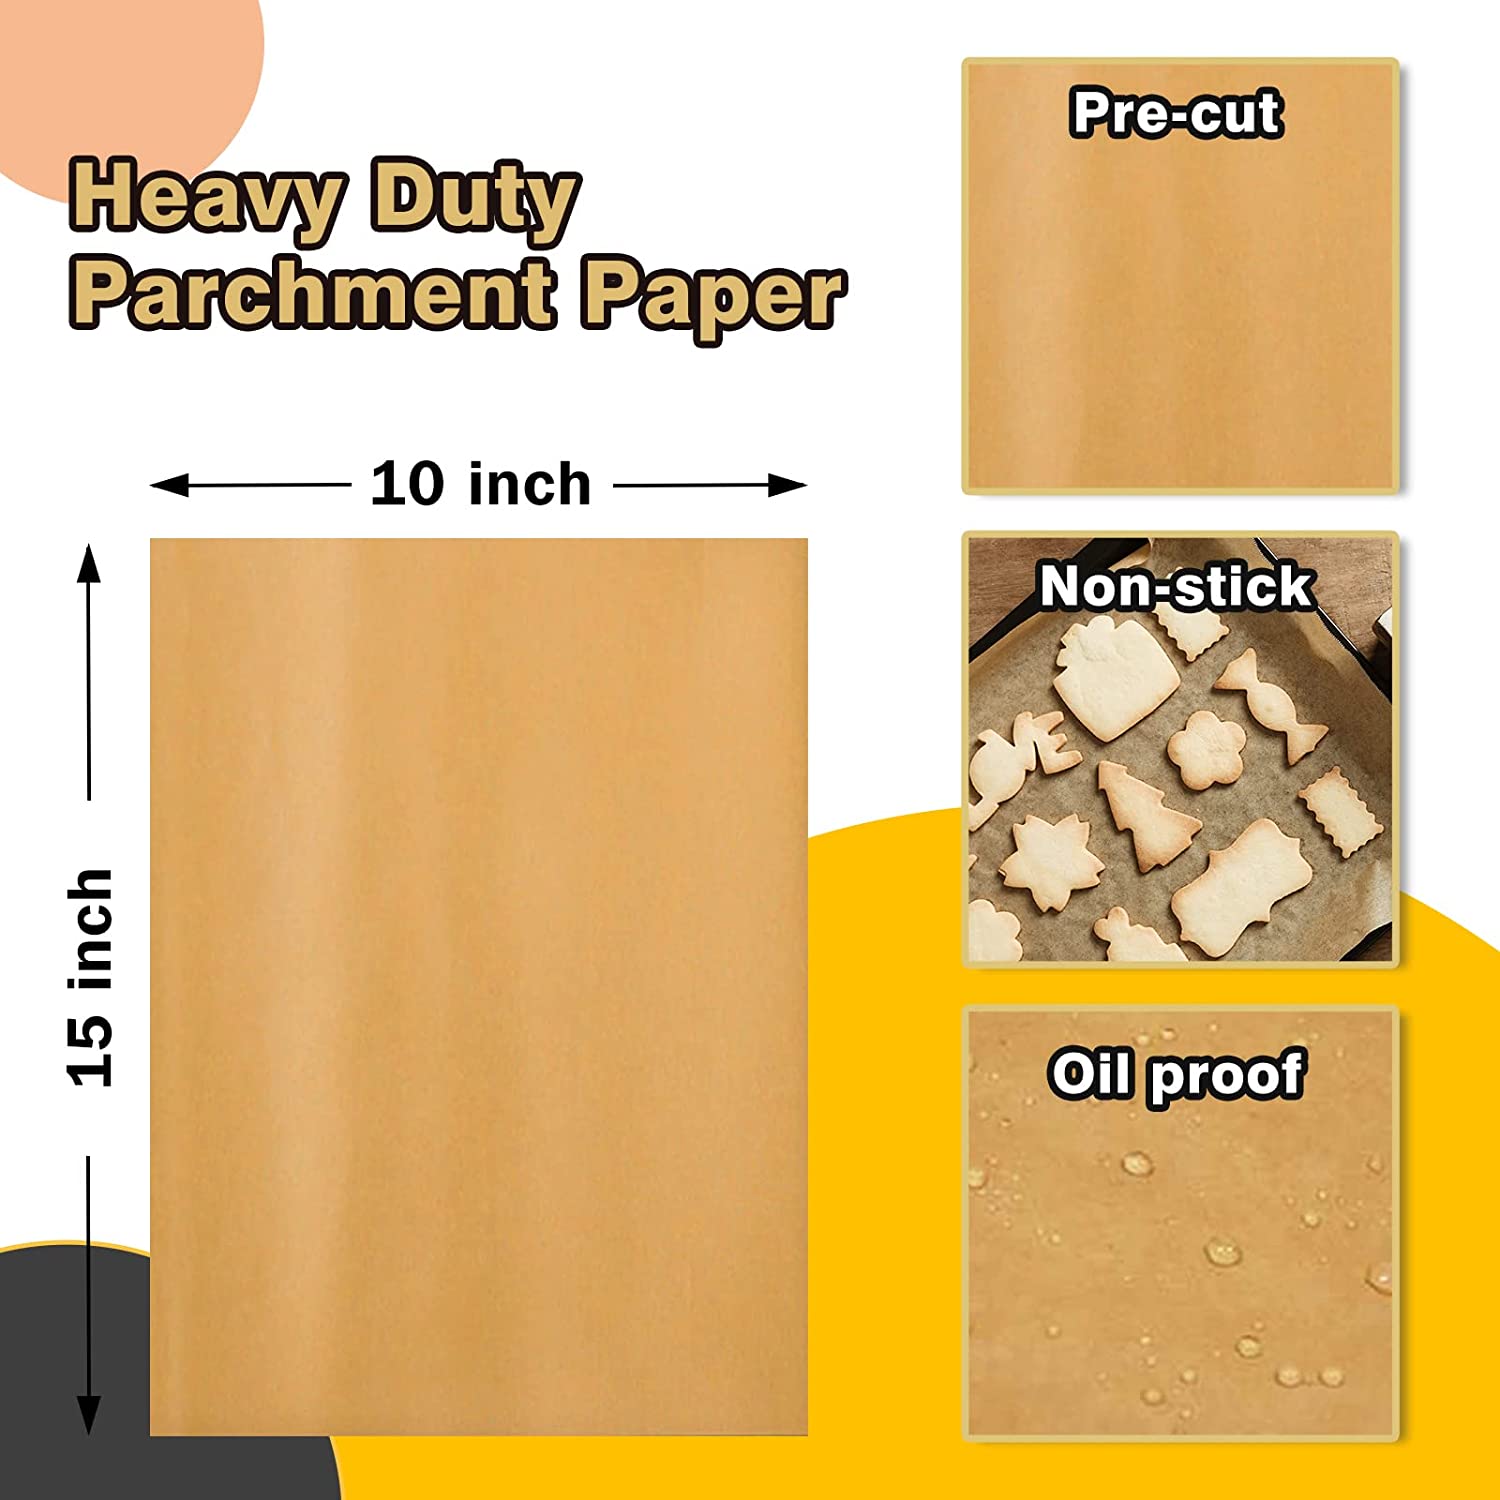 Katbite 15in x 242ft, 300 sq.ft Unbleached Parchment Paper Roll for Baking, Parchment Baking Paper with Serrated Cutter, Non-Stick Longer Parchment